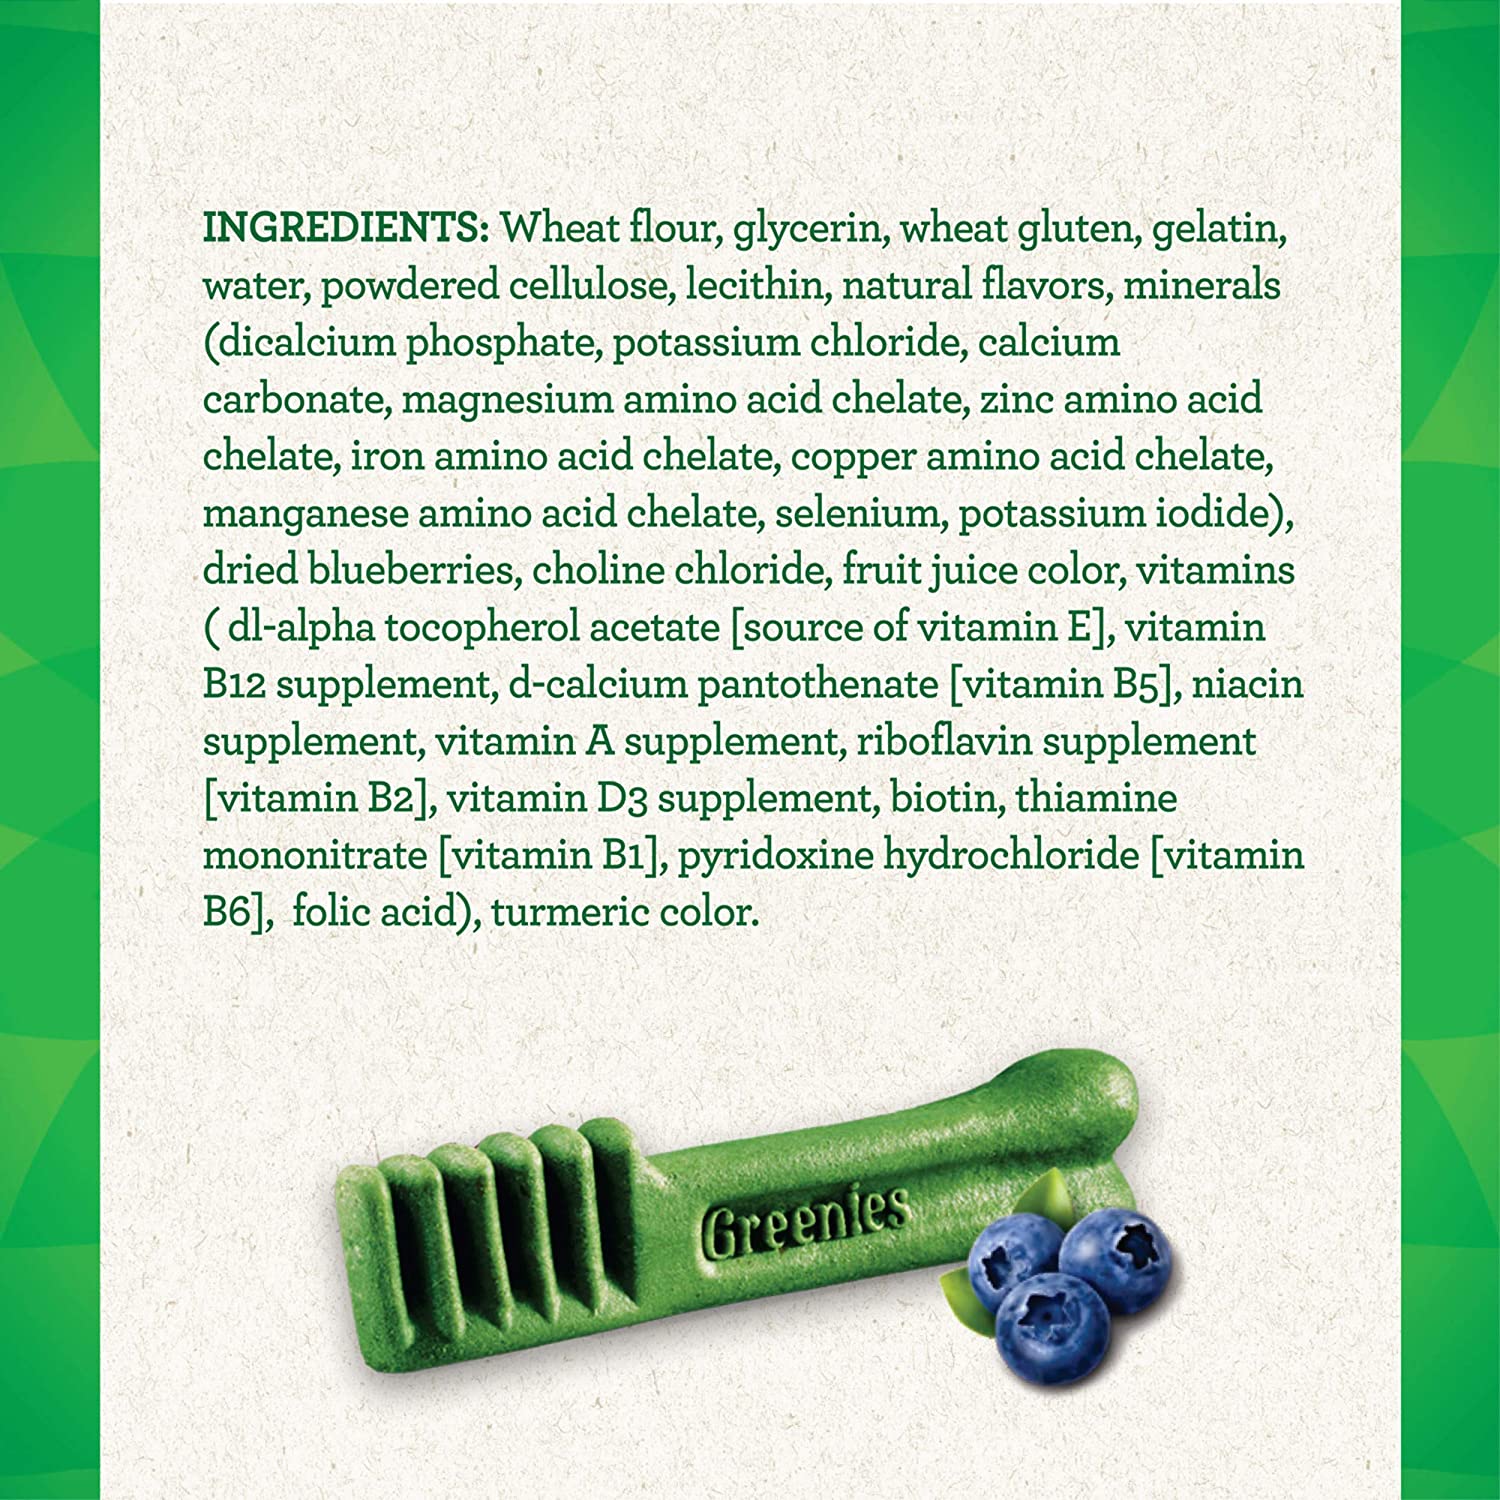 Greenies Petite Blueberry Treat Pack Dental Dog Treats - 12 oz  